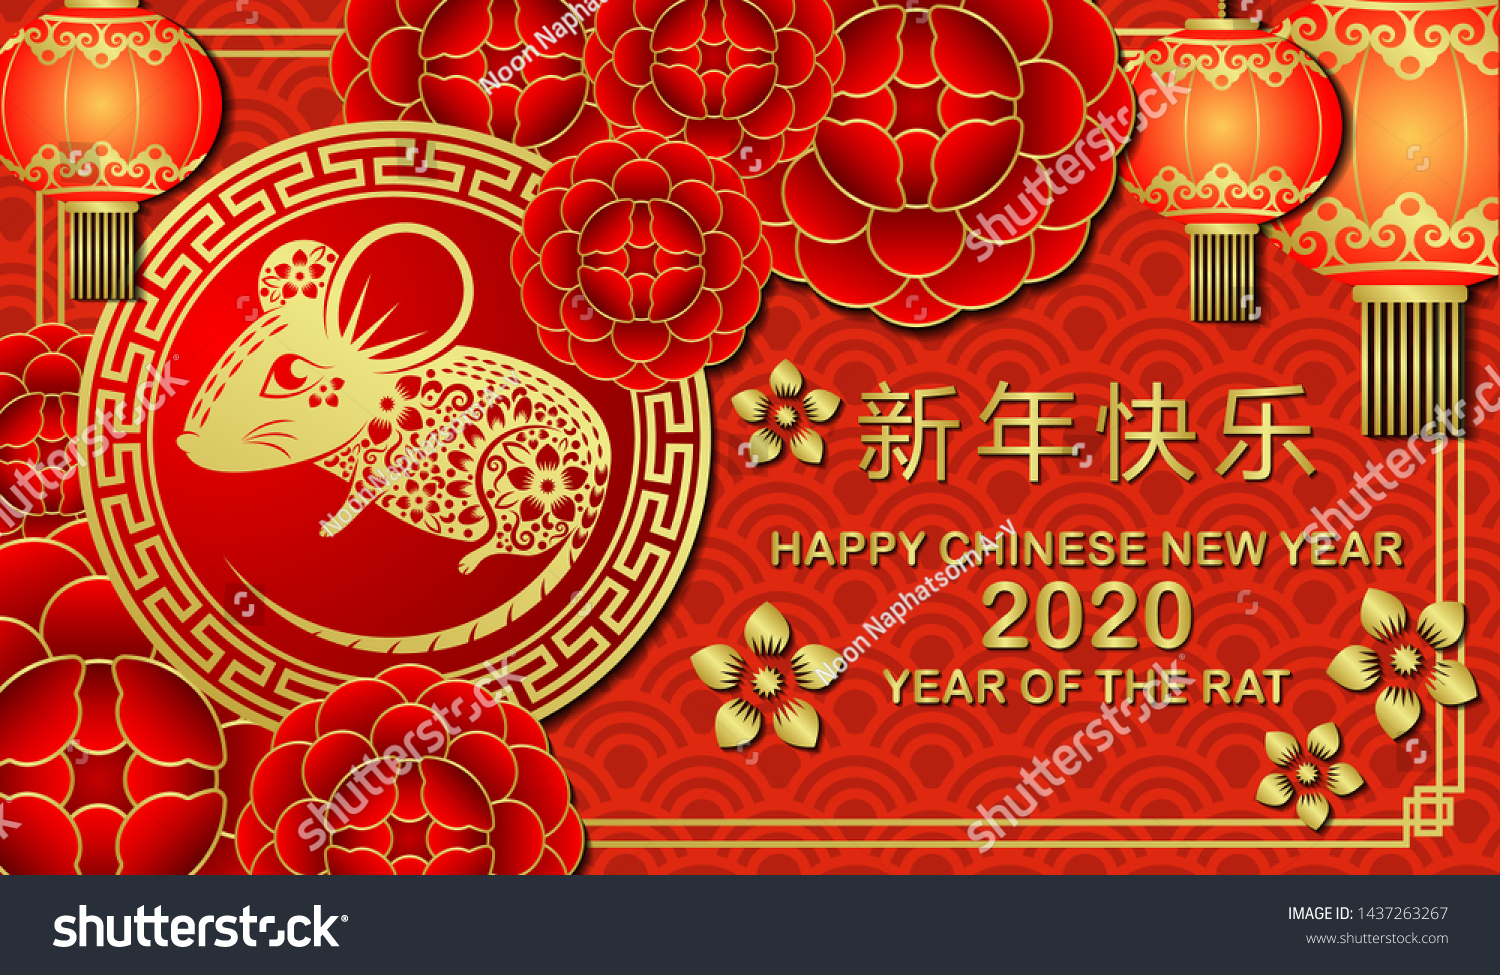 Happy Chinese New Year 2020 Rat のベクター画像素材 ロイヤリティ